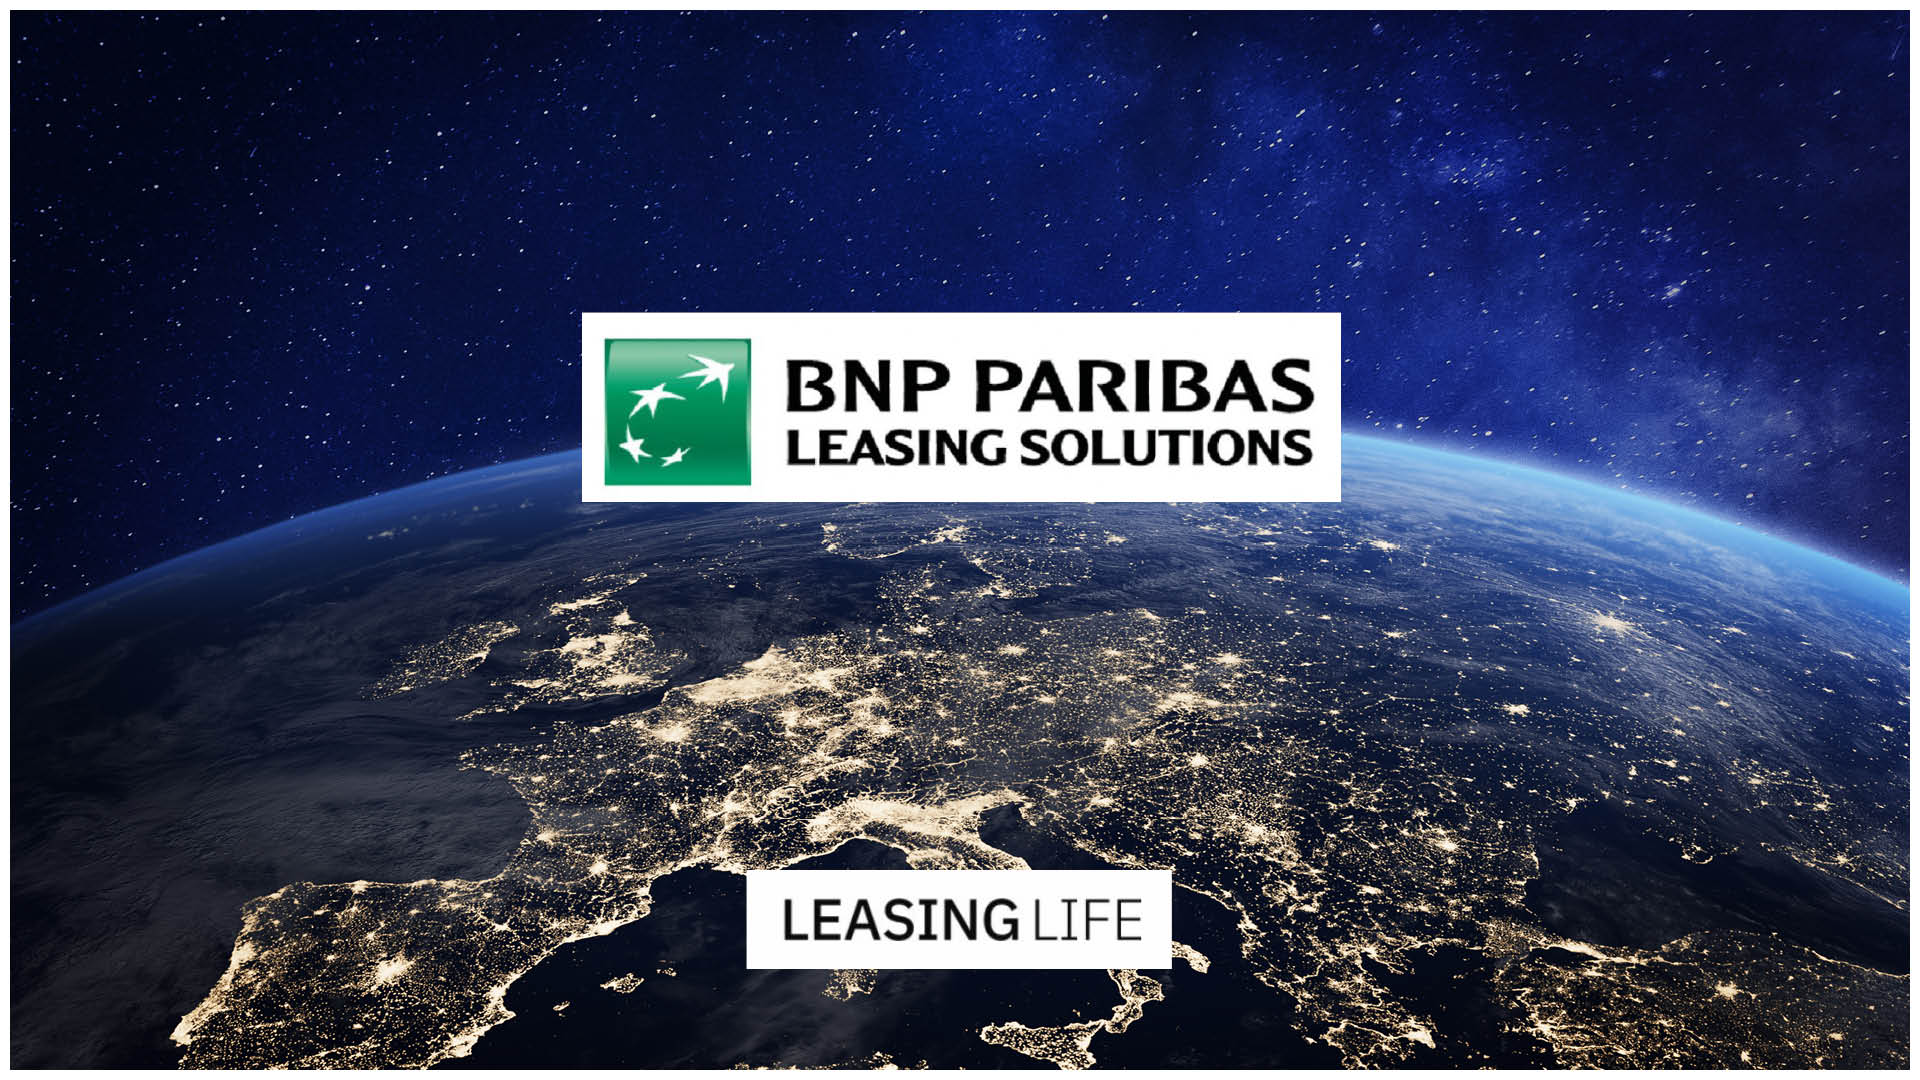 BNP Paribas Leasing Solutions raises €500m via its first securitisation